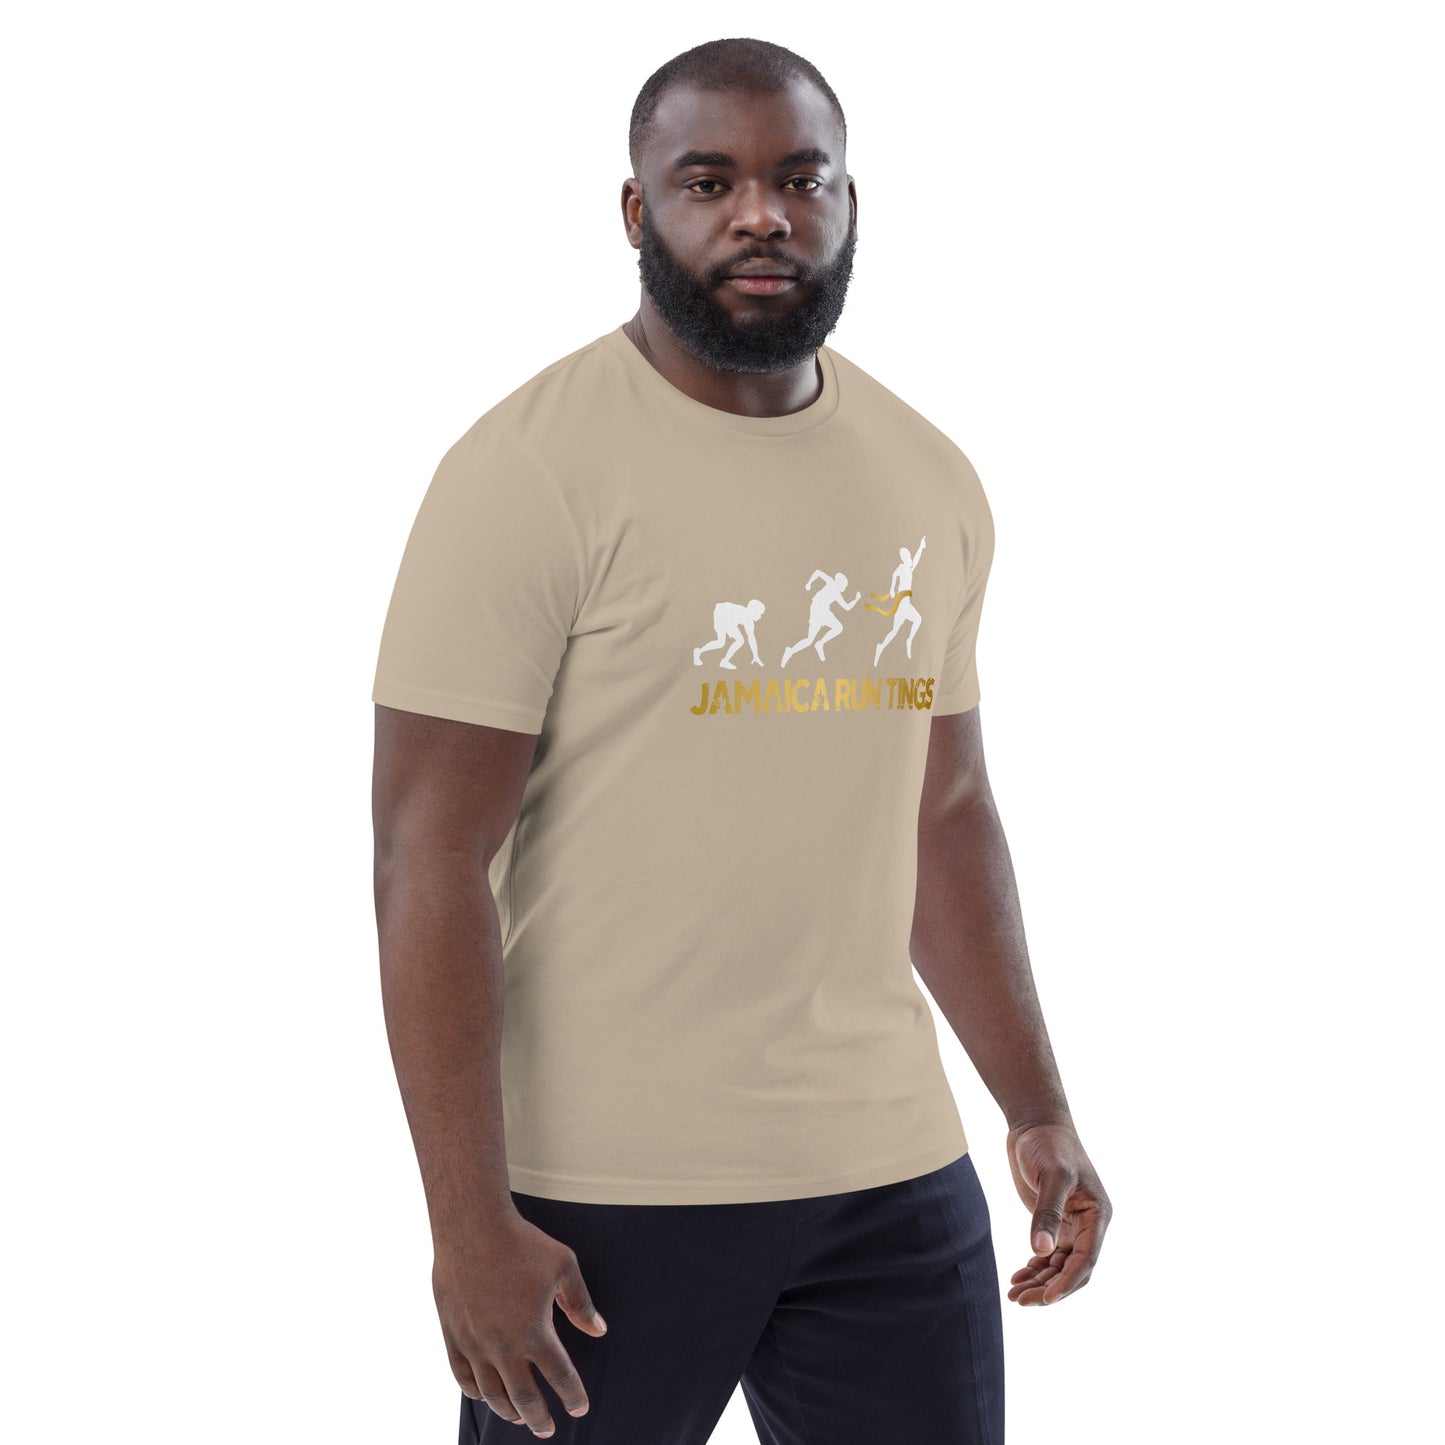 Jamaica Run Tings T-shirt unisexe en coton biologique